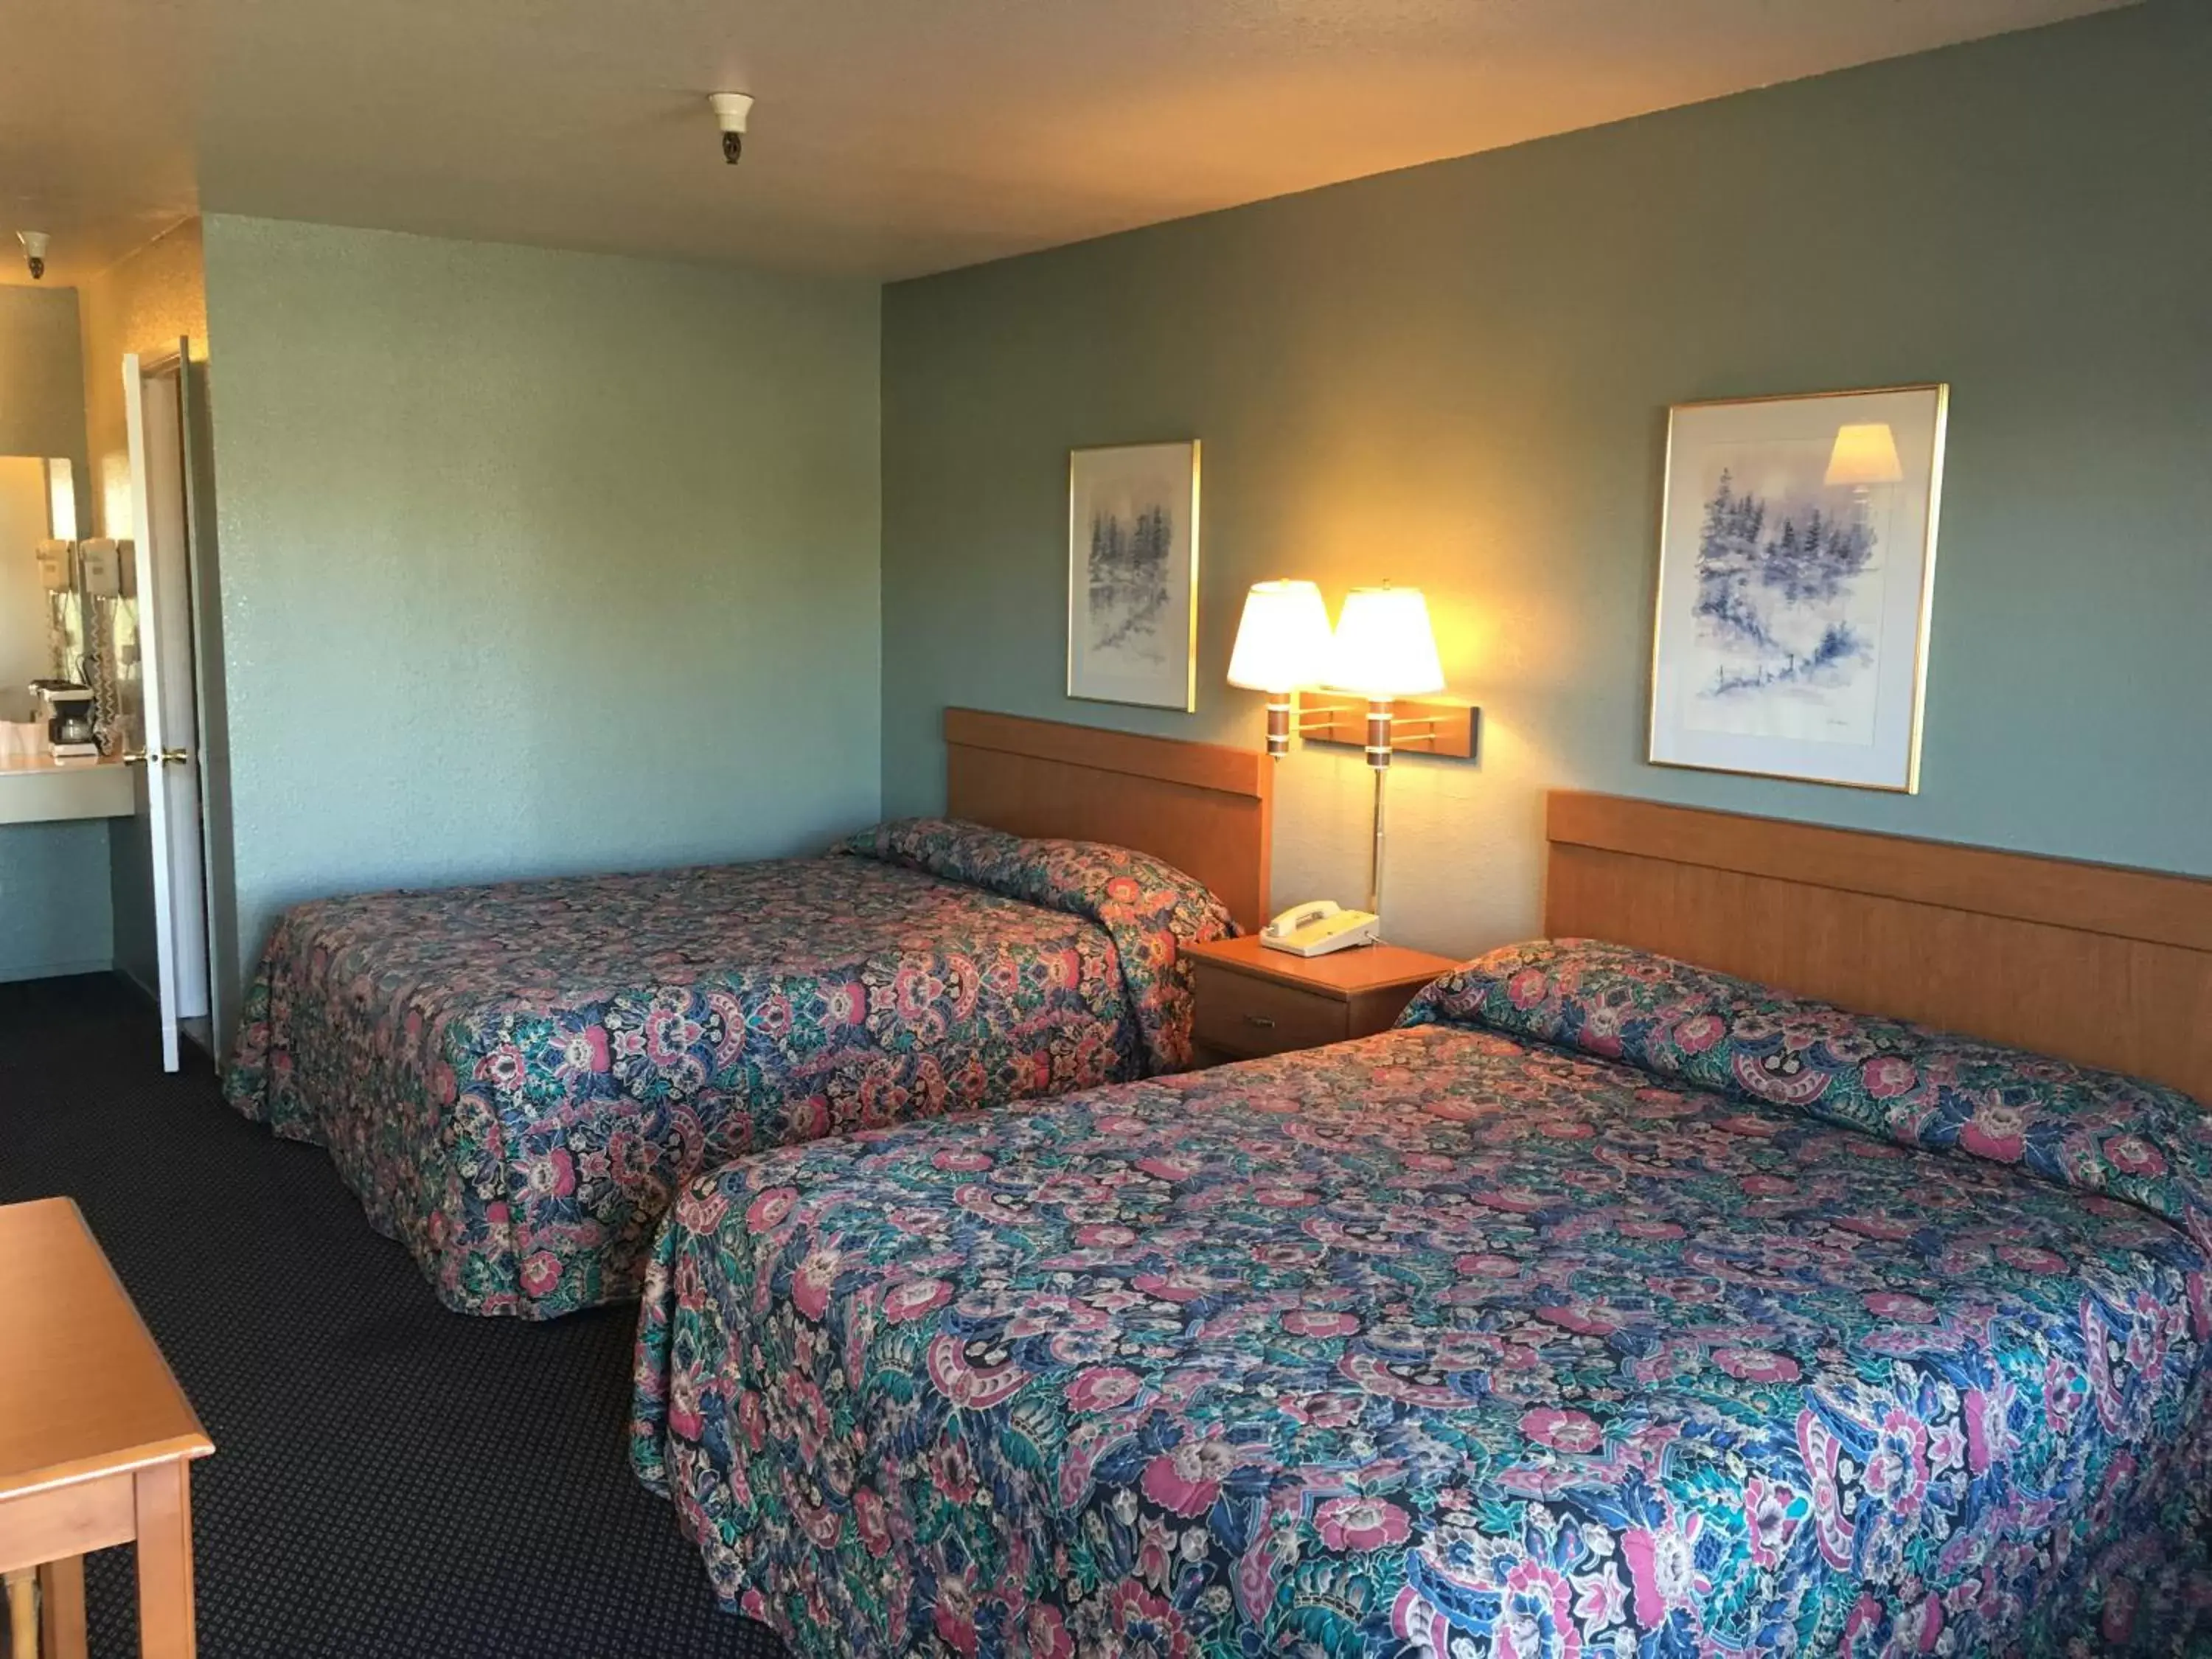 Bed, Room Photo in Applegate Inn